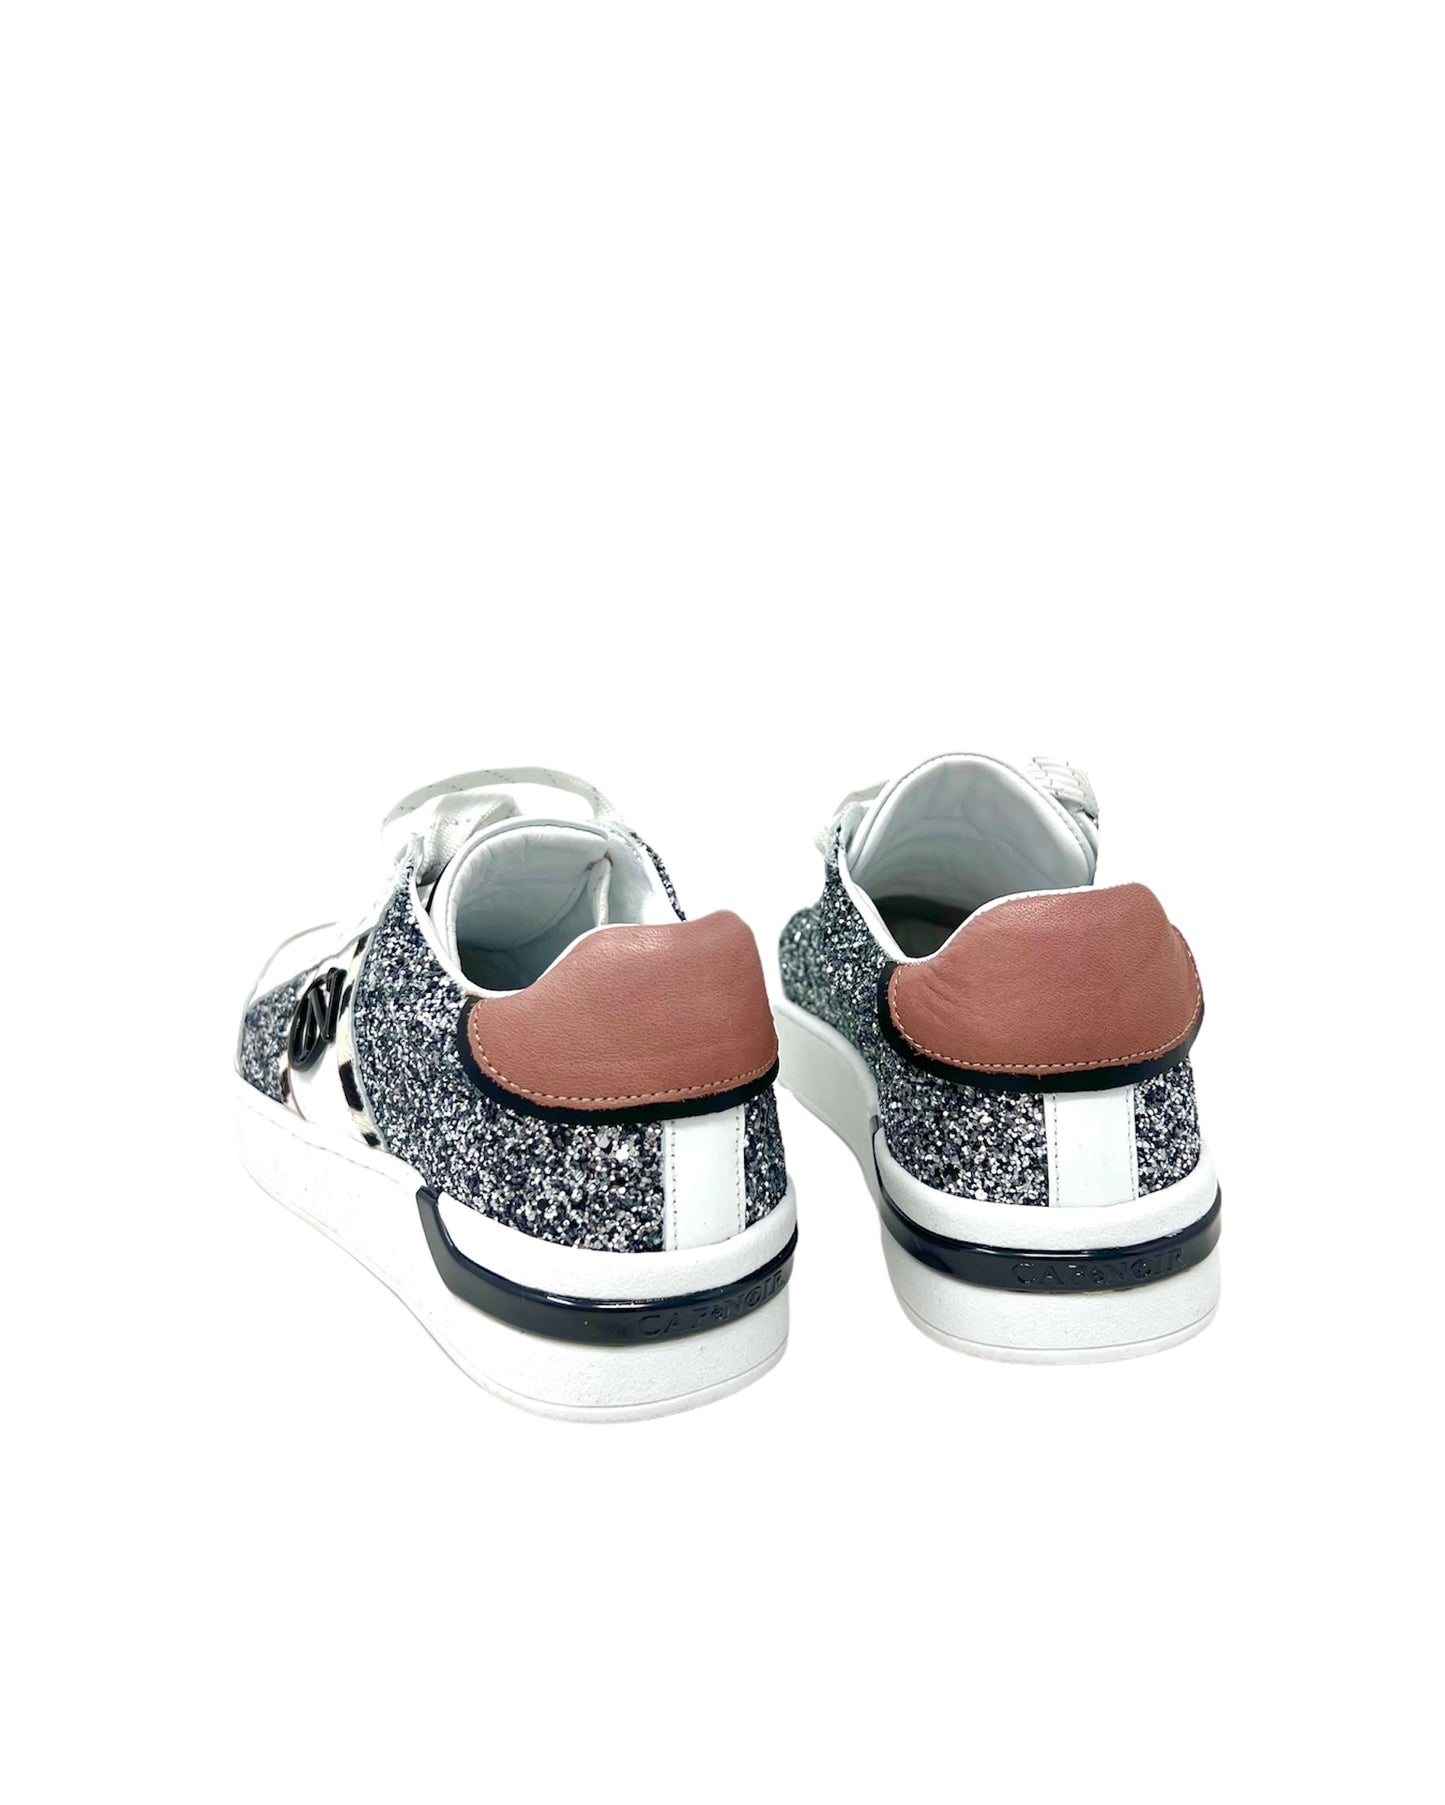 Sneakers glitter argento con logo - DS958AR